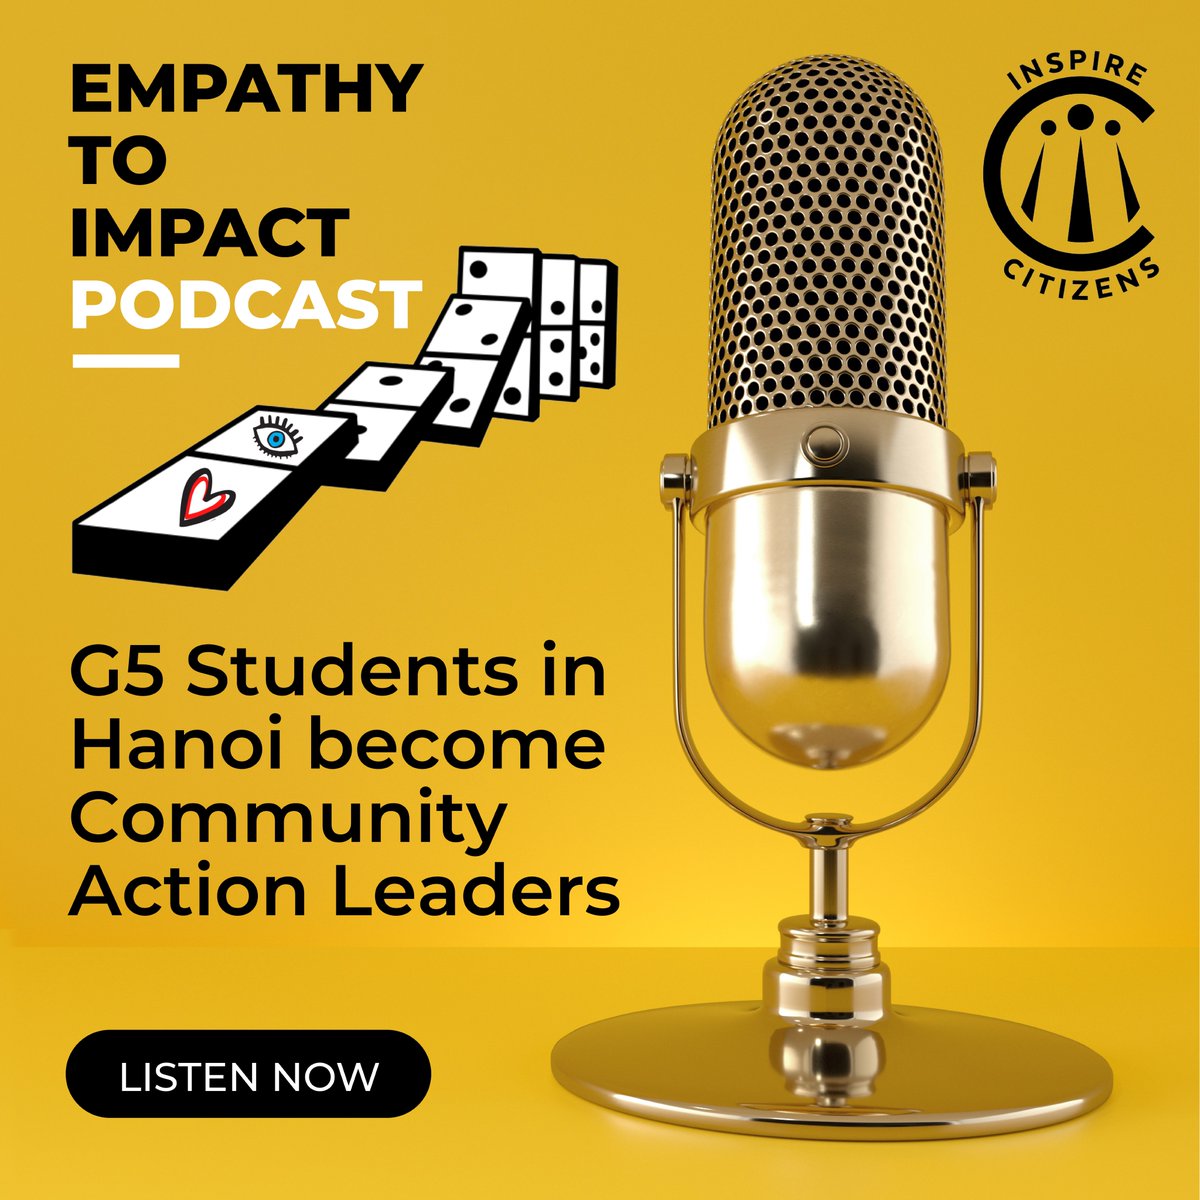 Listen to @ICGlobalCitizen “Grade 5 Students in Hanoi Become Community Action Leaders” Listen: empathytoimpact.transistor.fm/55 Subscribe: feeds.transistor.fm/empathy-to-imp… #Podcast #Students #CommunityActionLeaders #InspireCitizens #GlobalCitizenship #EmpathyToImpact #ImpactChange